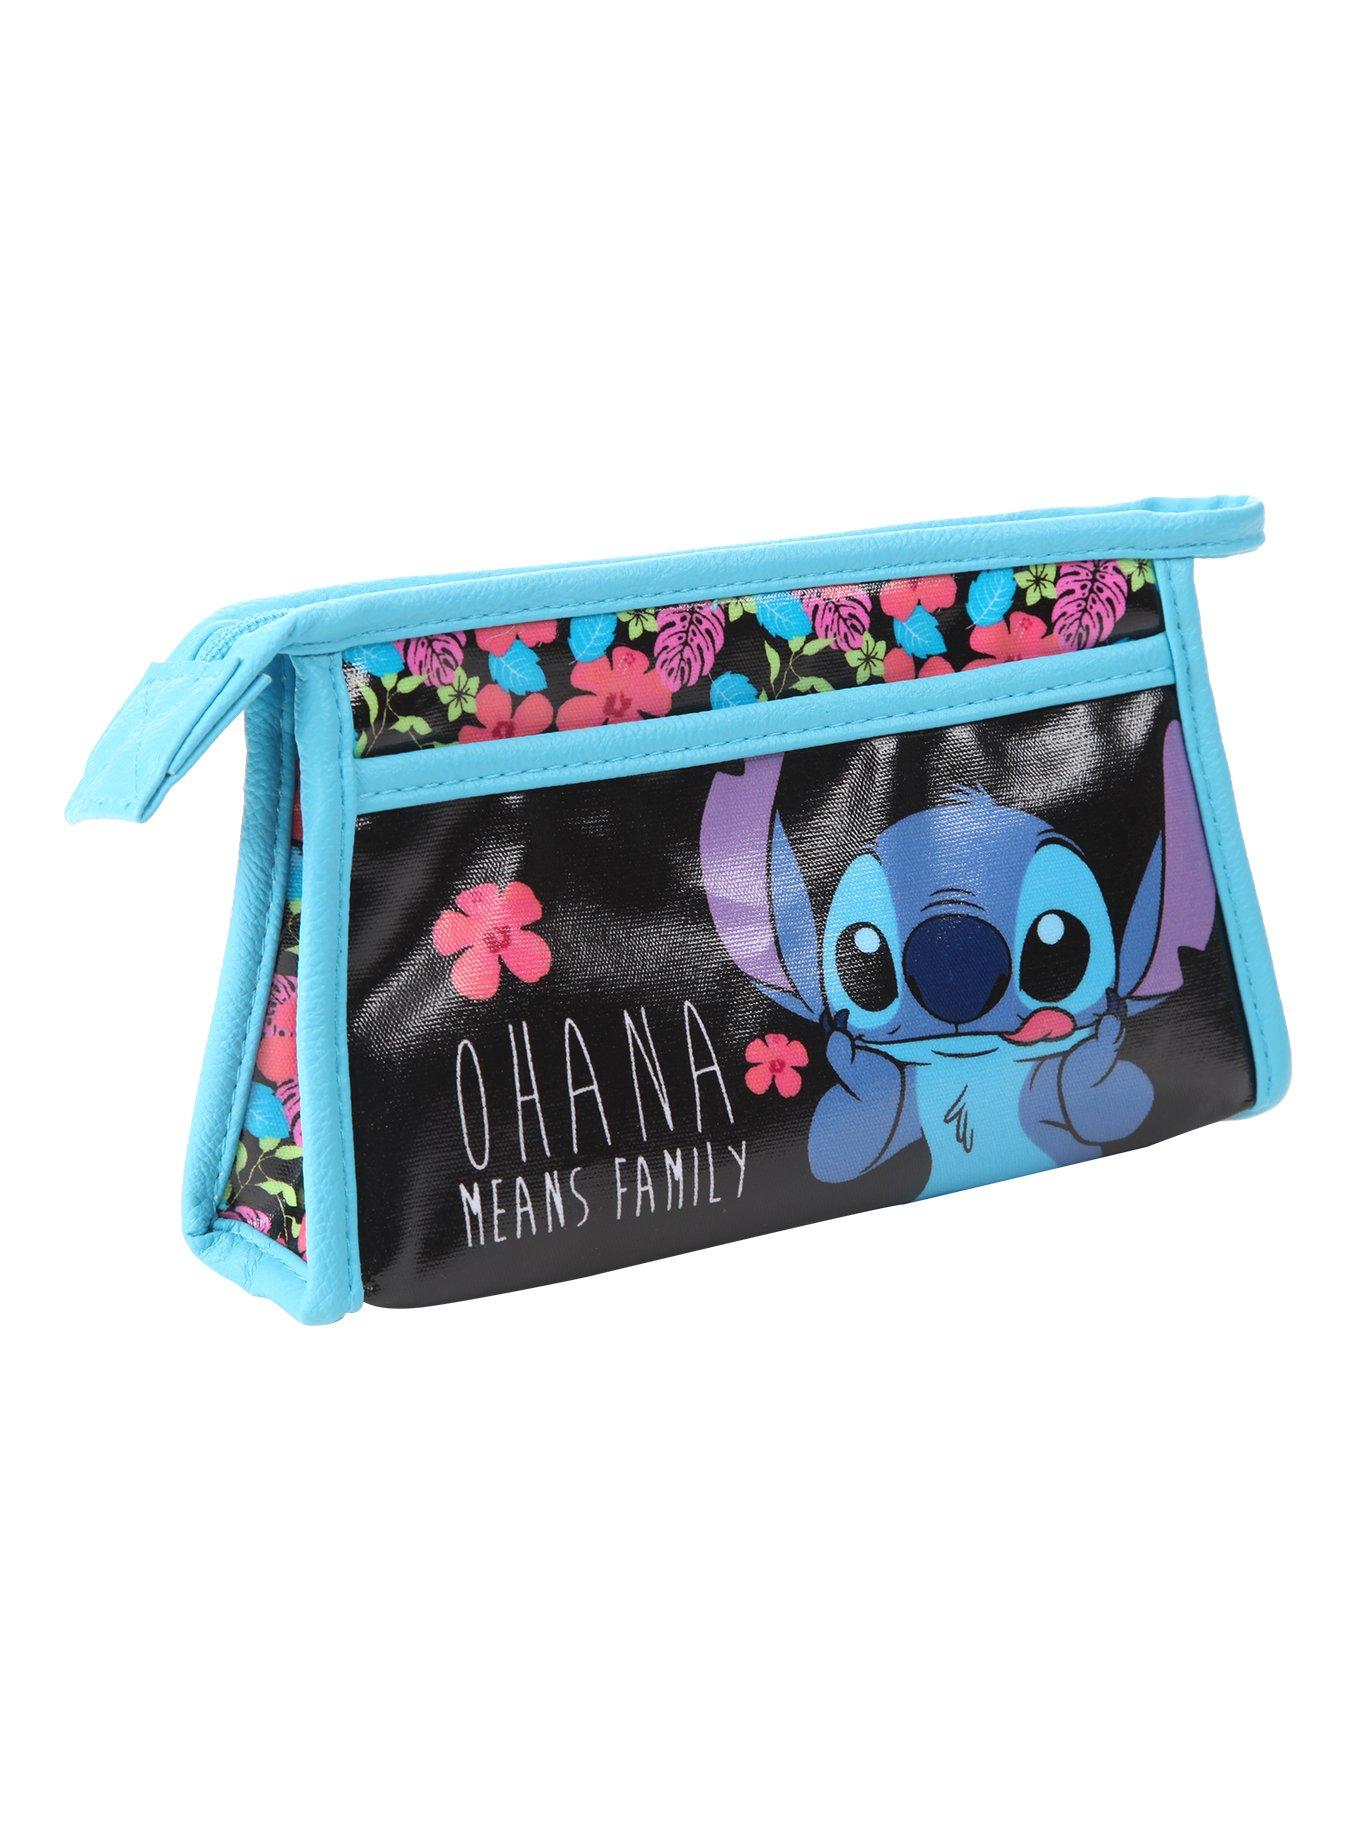 Disney Lilo & Stitch Ohana Means Family Cosmetic Bag, , hi-res